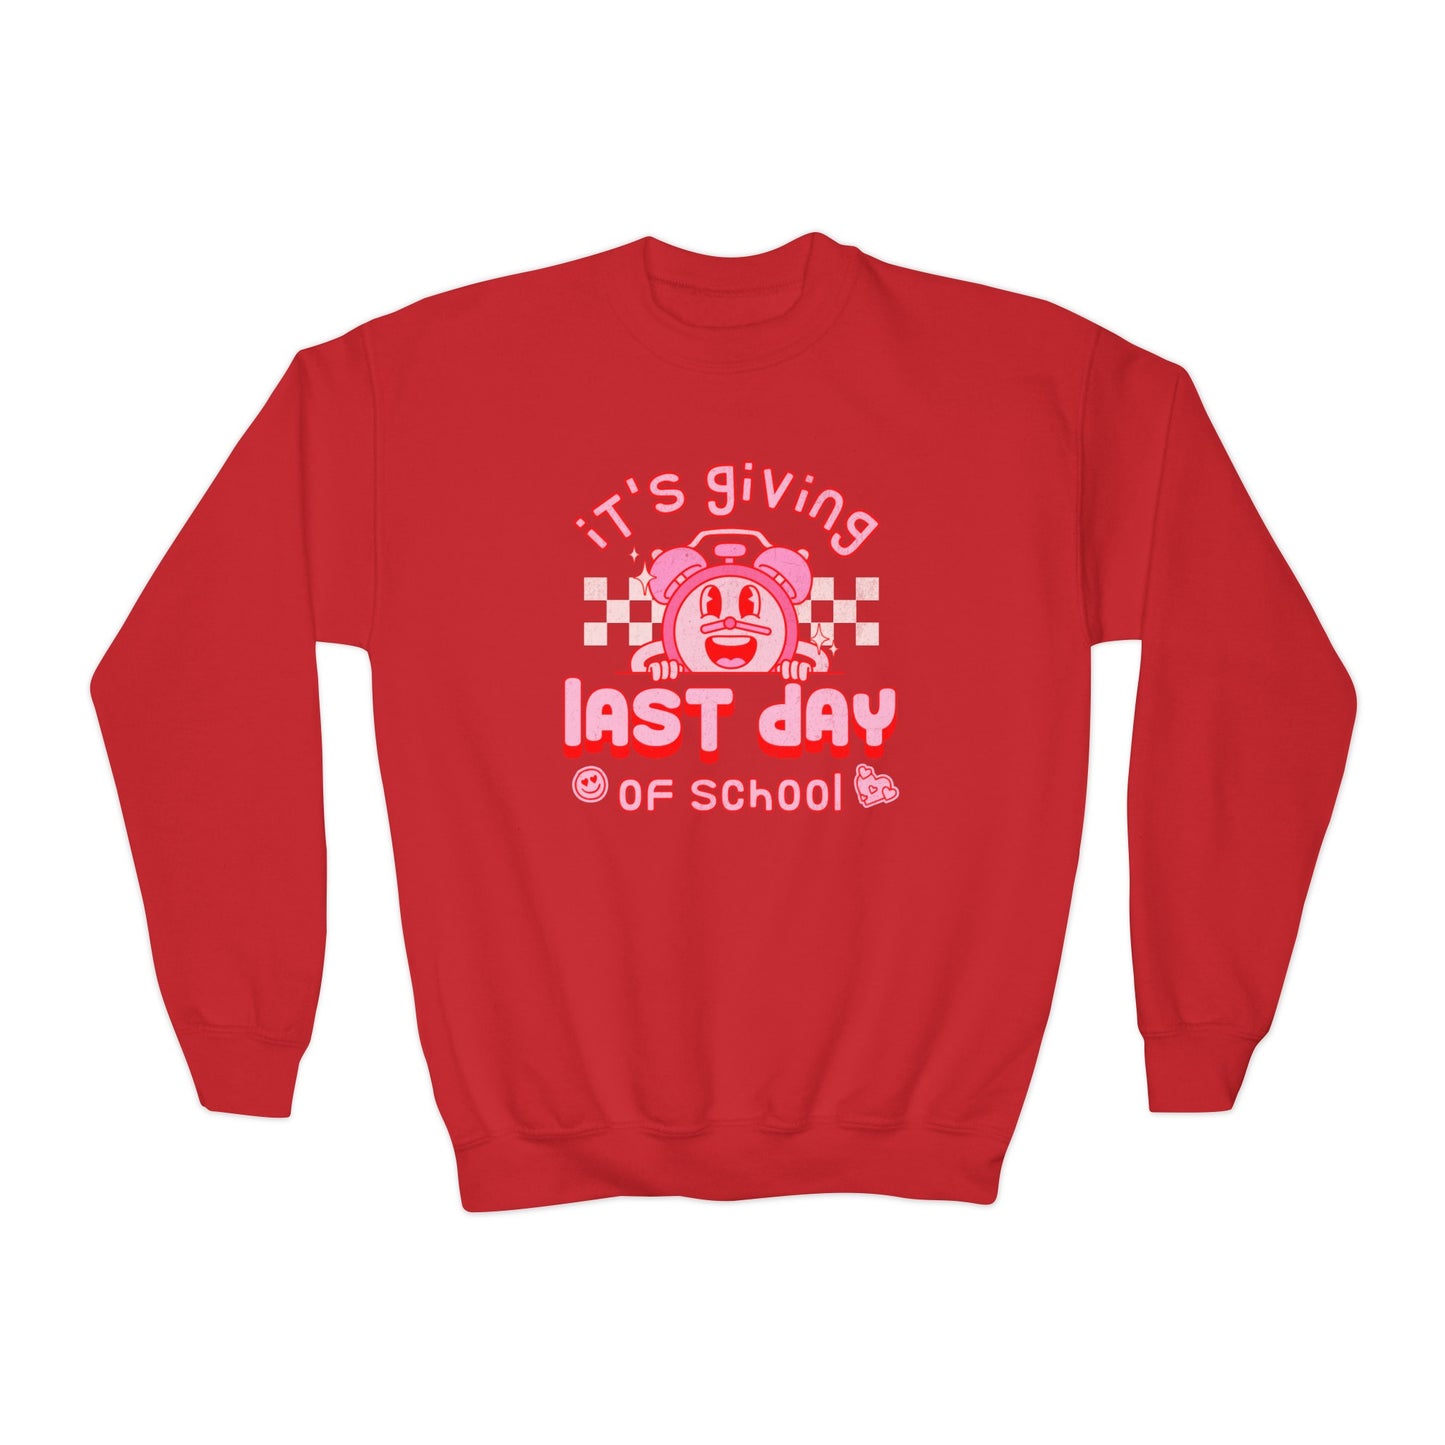 It's Giving Last Day of School - Youth Crewneck Sweatshirt